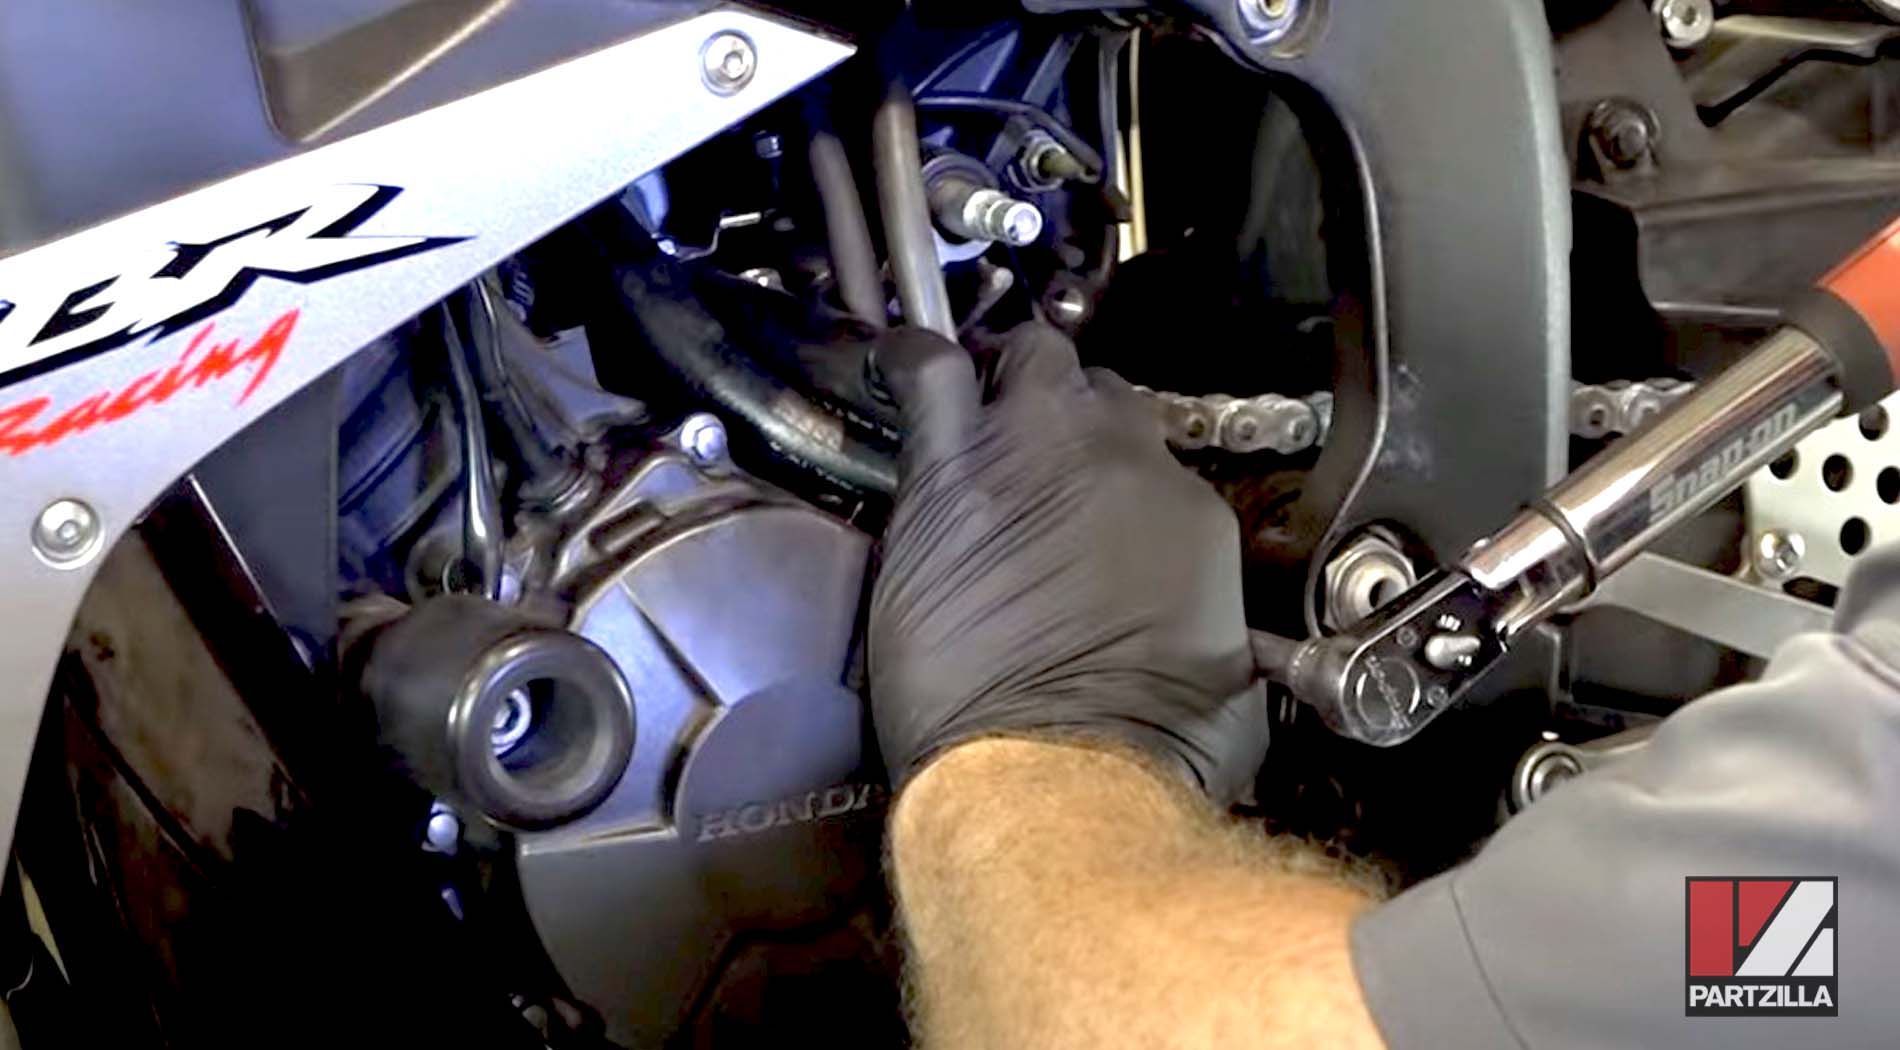 Honda CBR600 new chain and sprocket installation